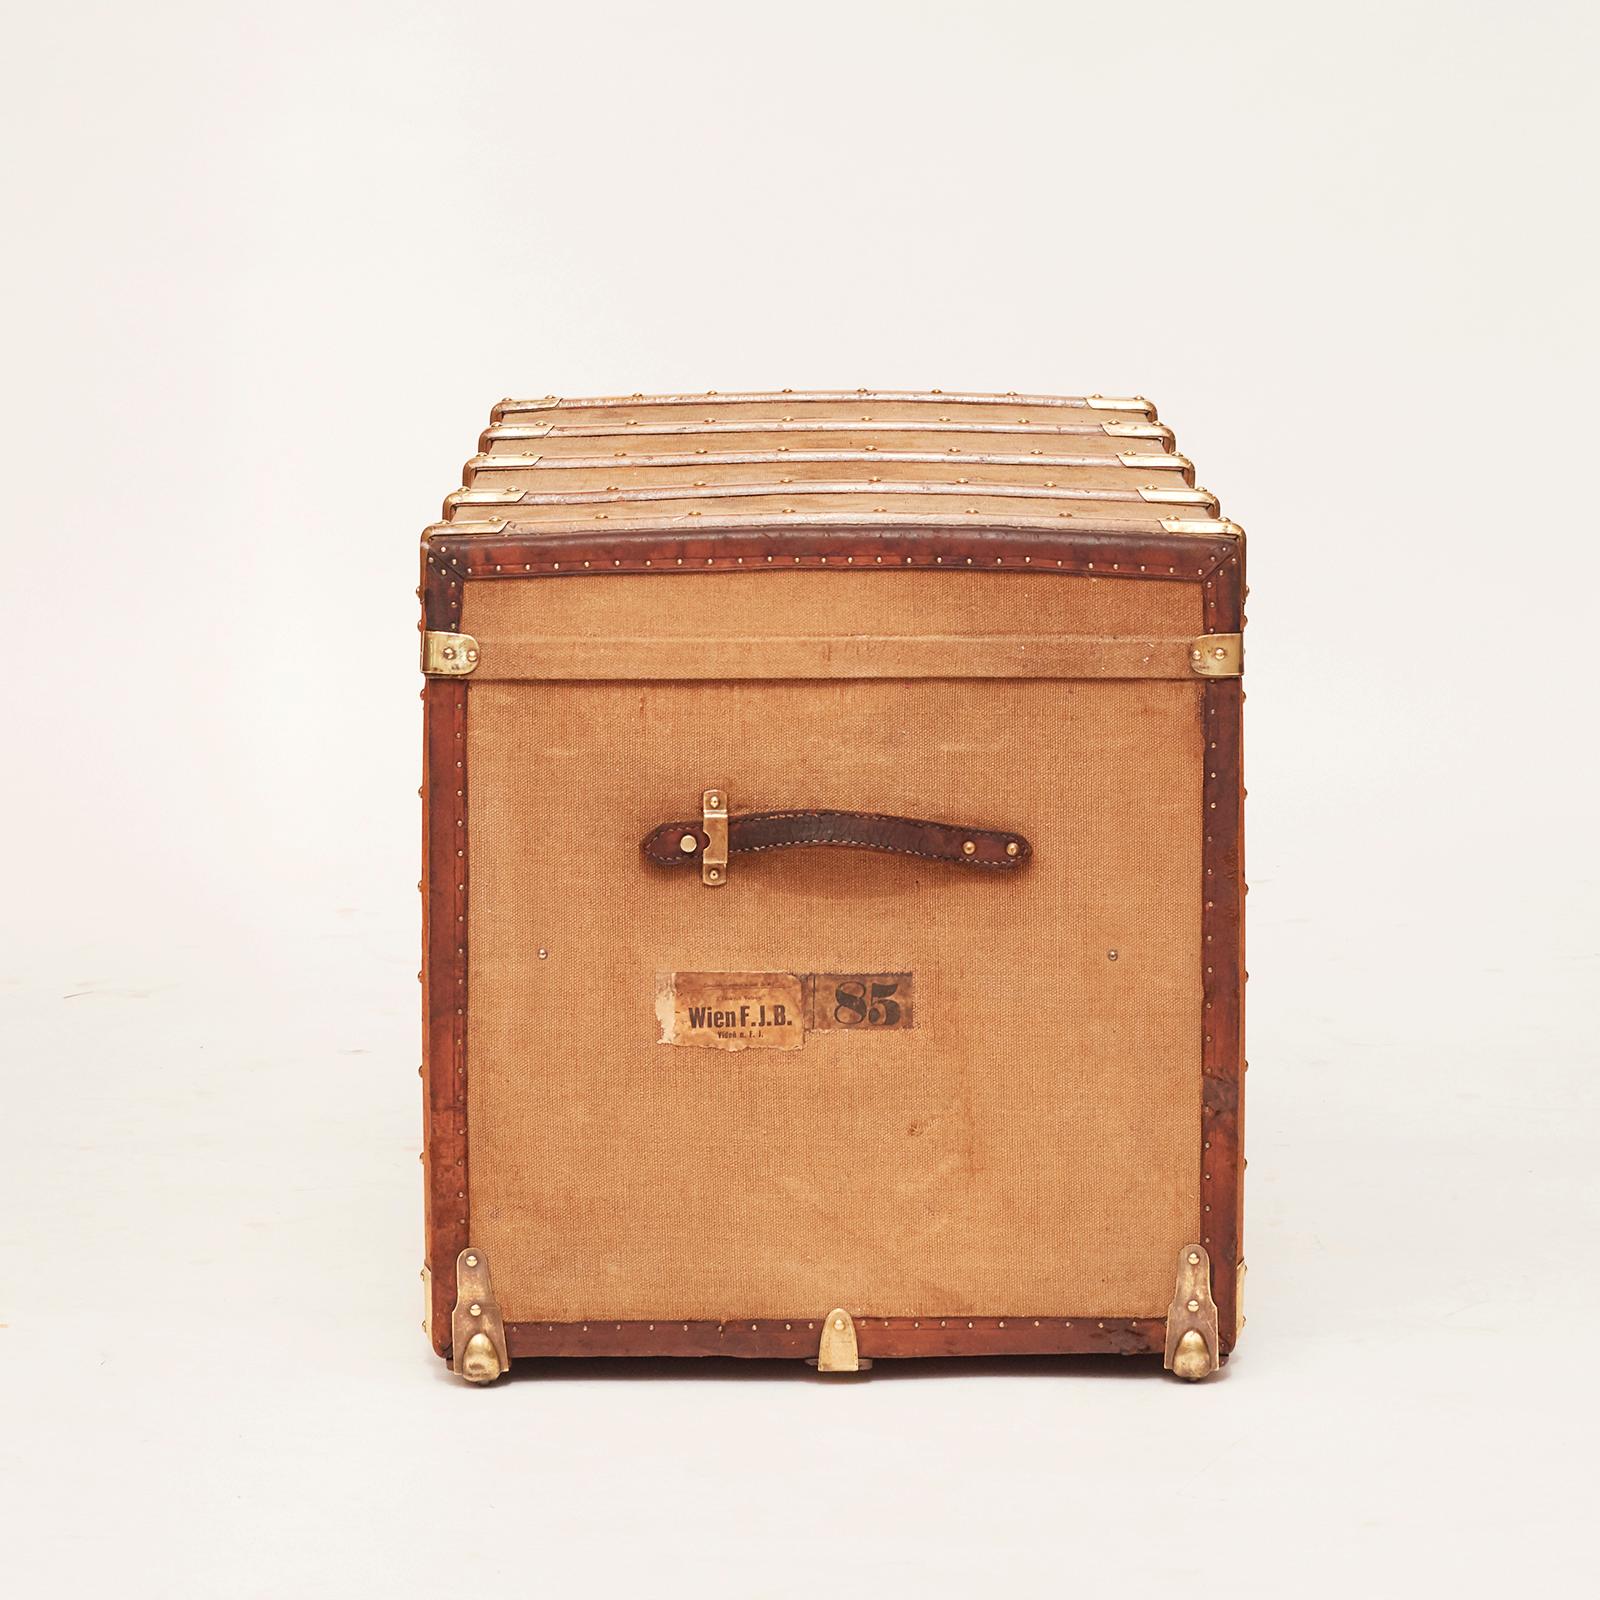 Austrian Vintage Travel Suitcase, J.Nigst & Sohn